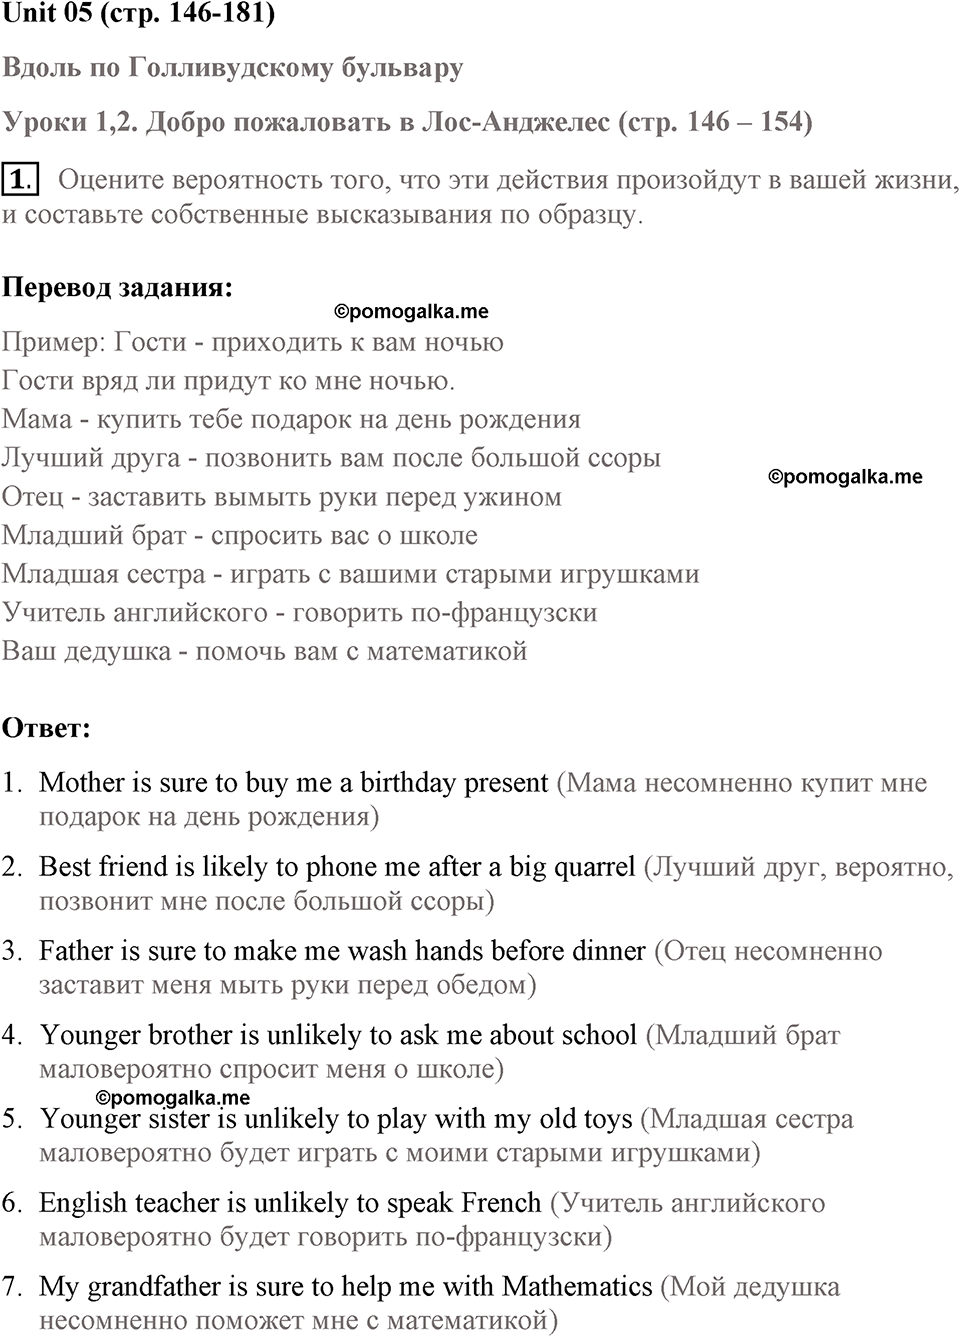 Unit 5 lesson 1-2 exercise №1 английский язык 9 класс Happy English.ru